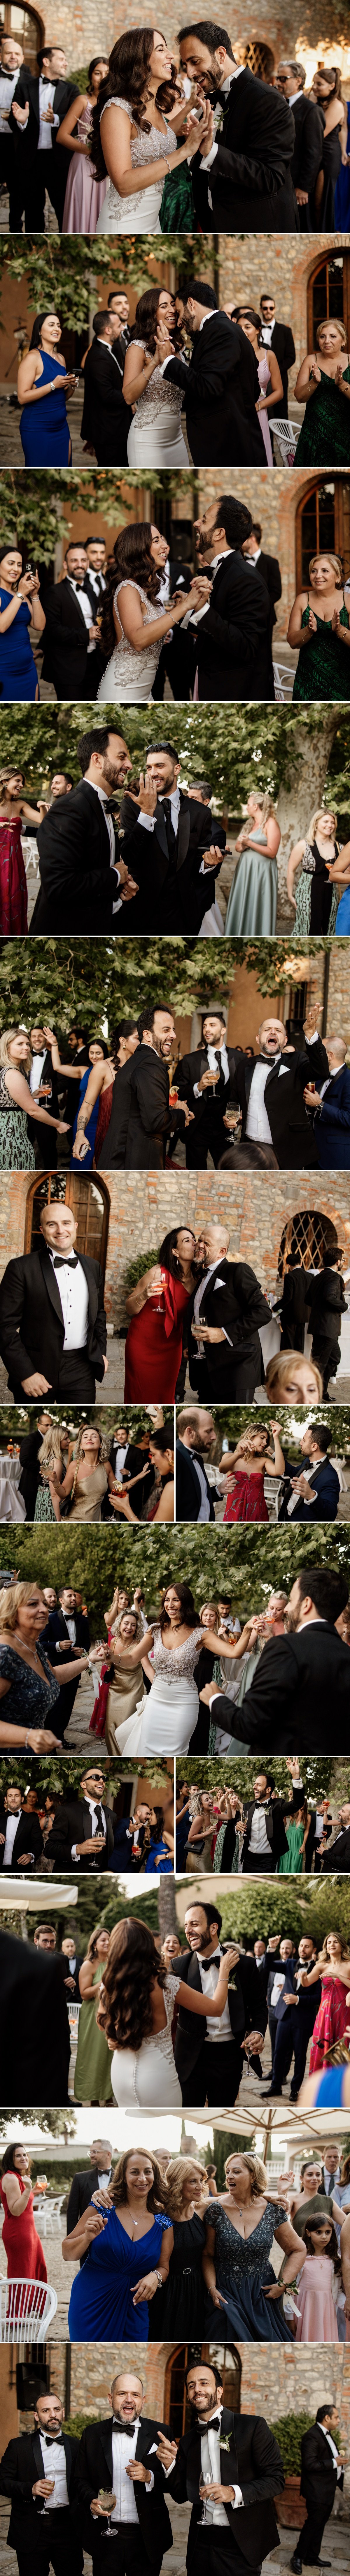 tuscany-wedding-dallk-19.jpg